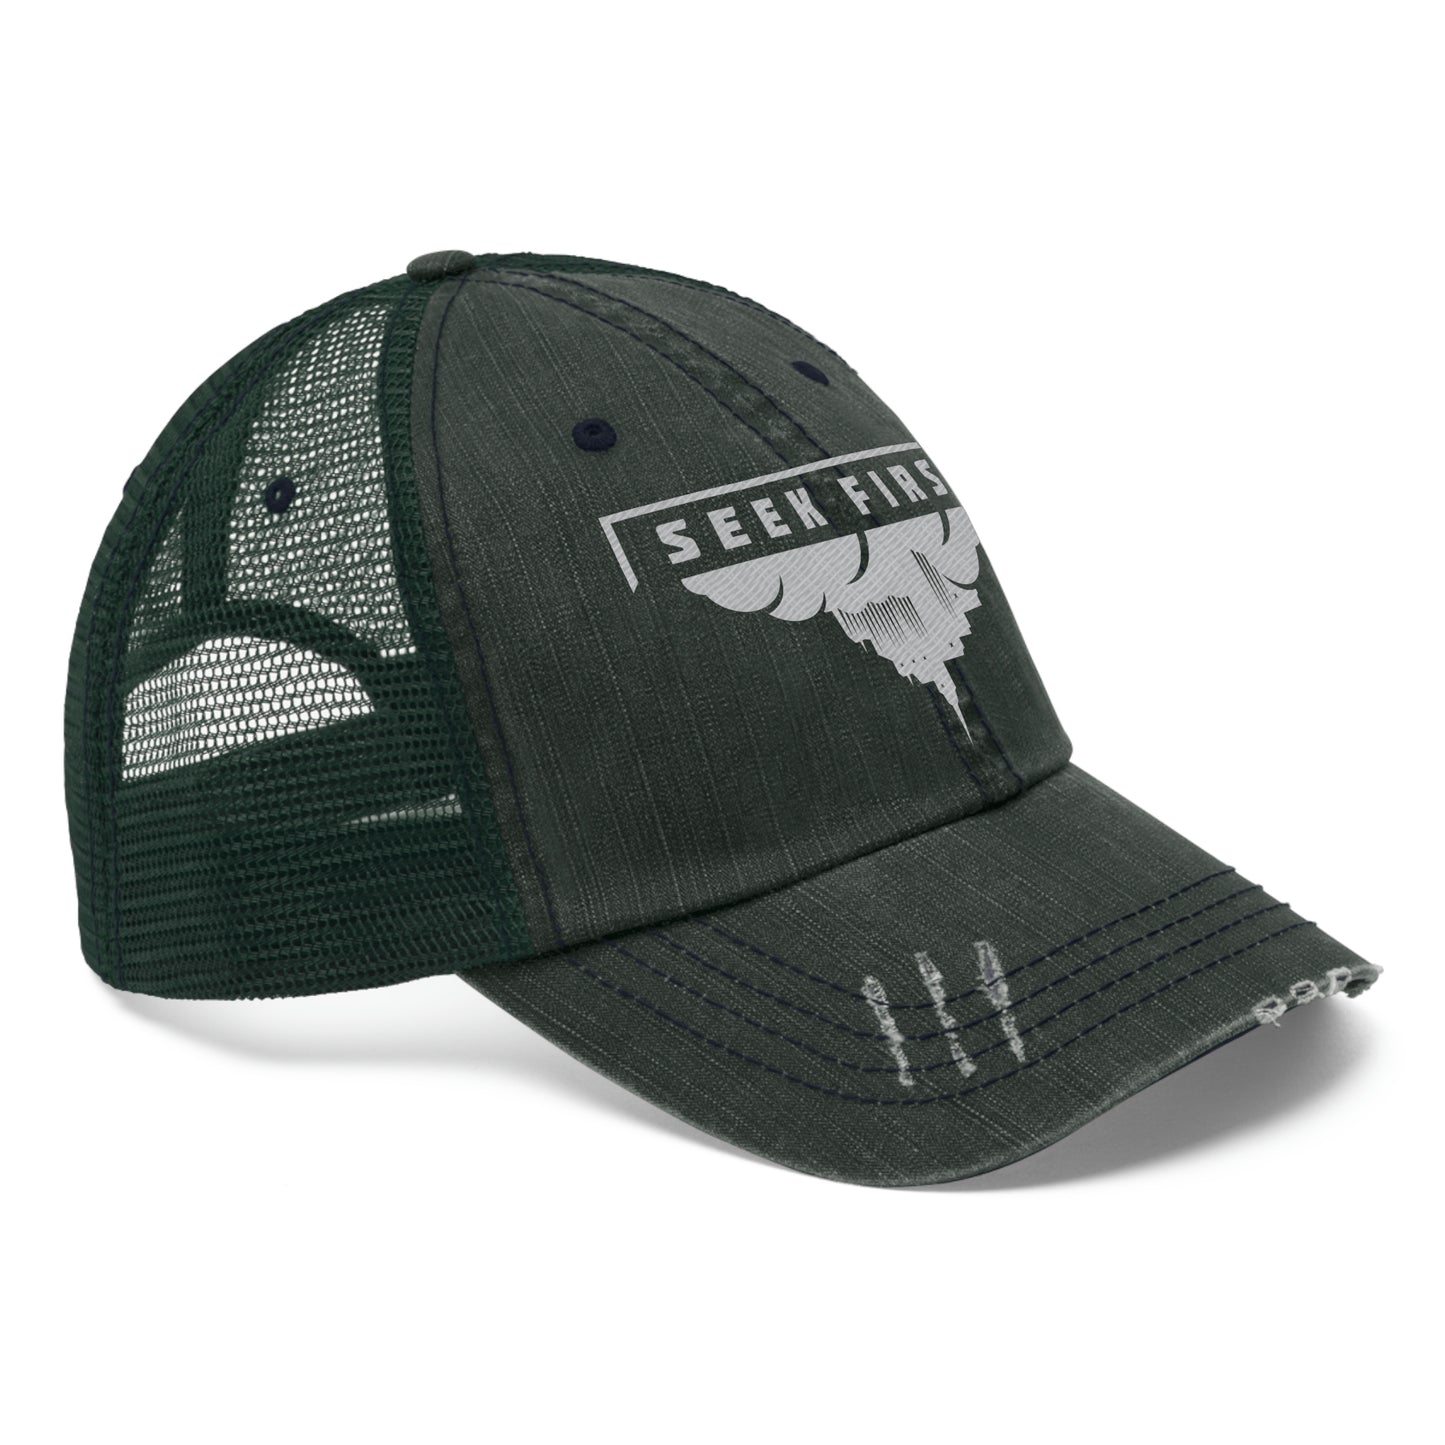 Seek First - Unisex Trucker Hat